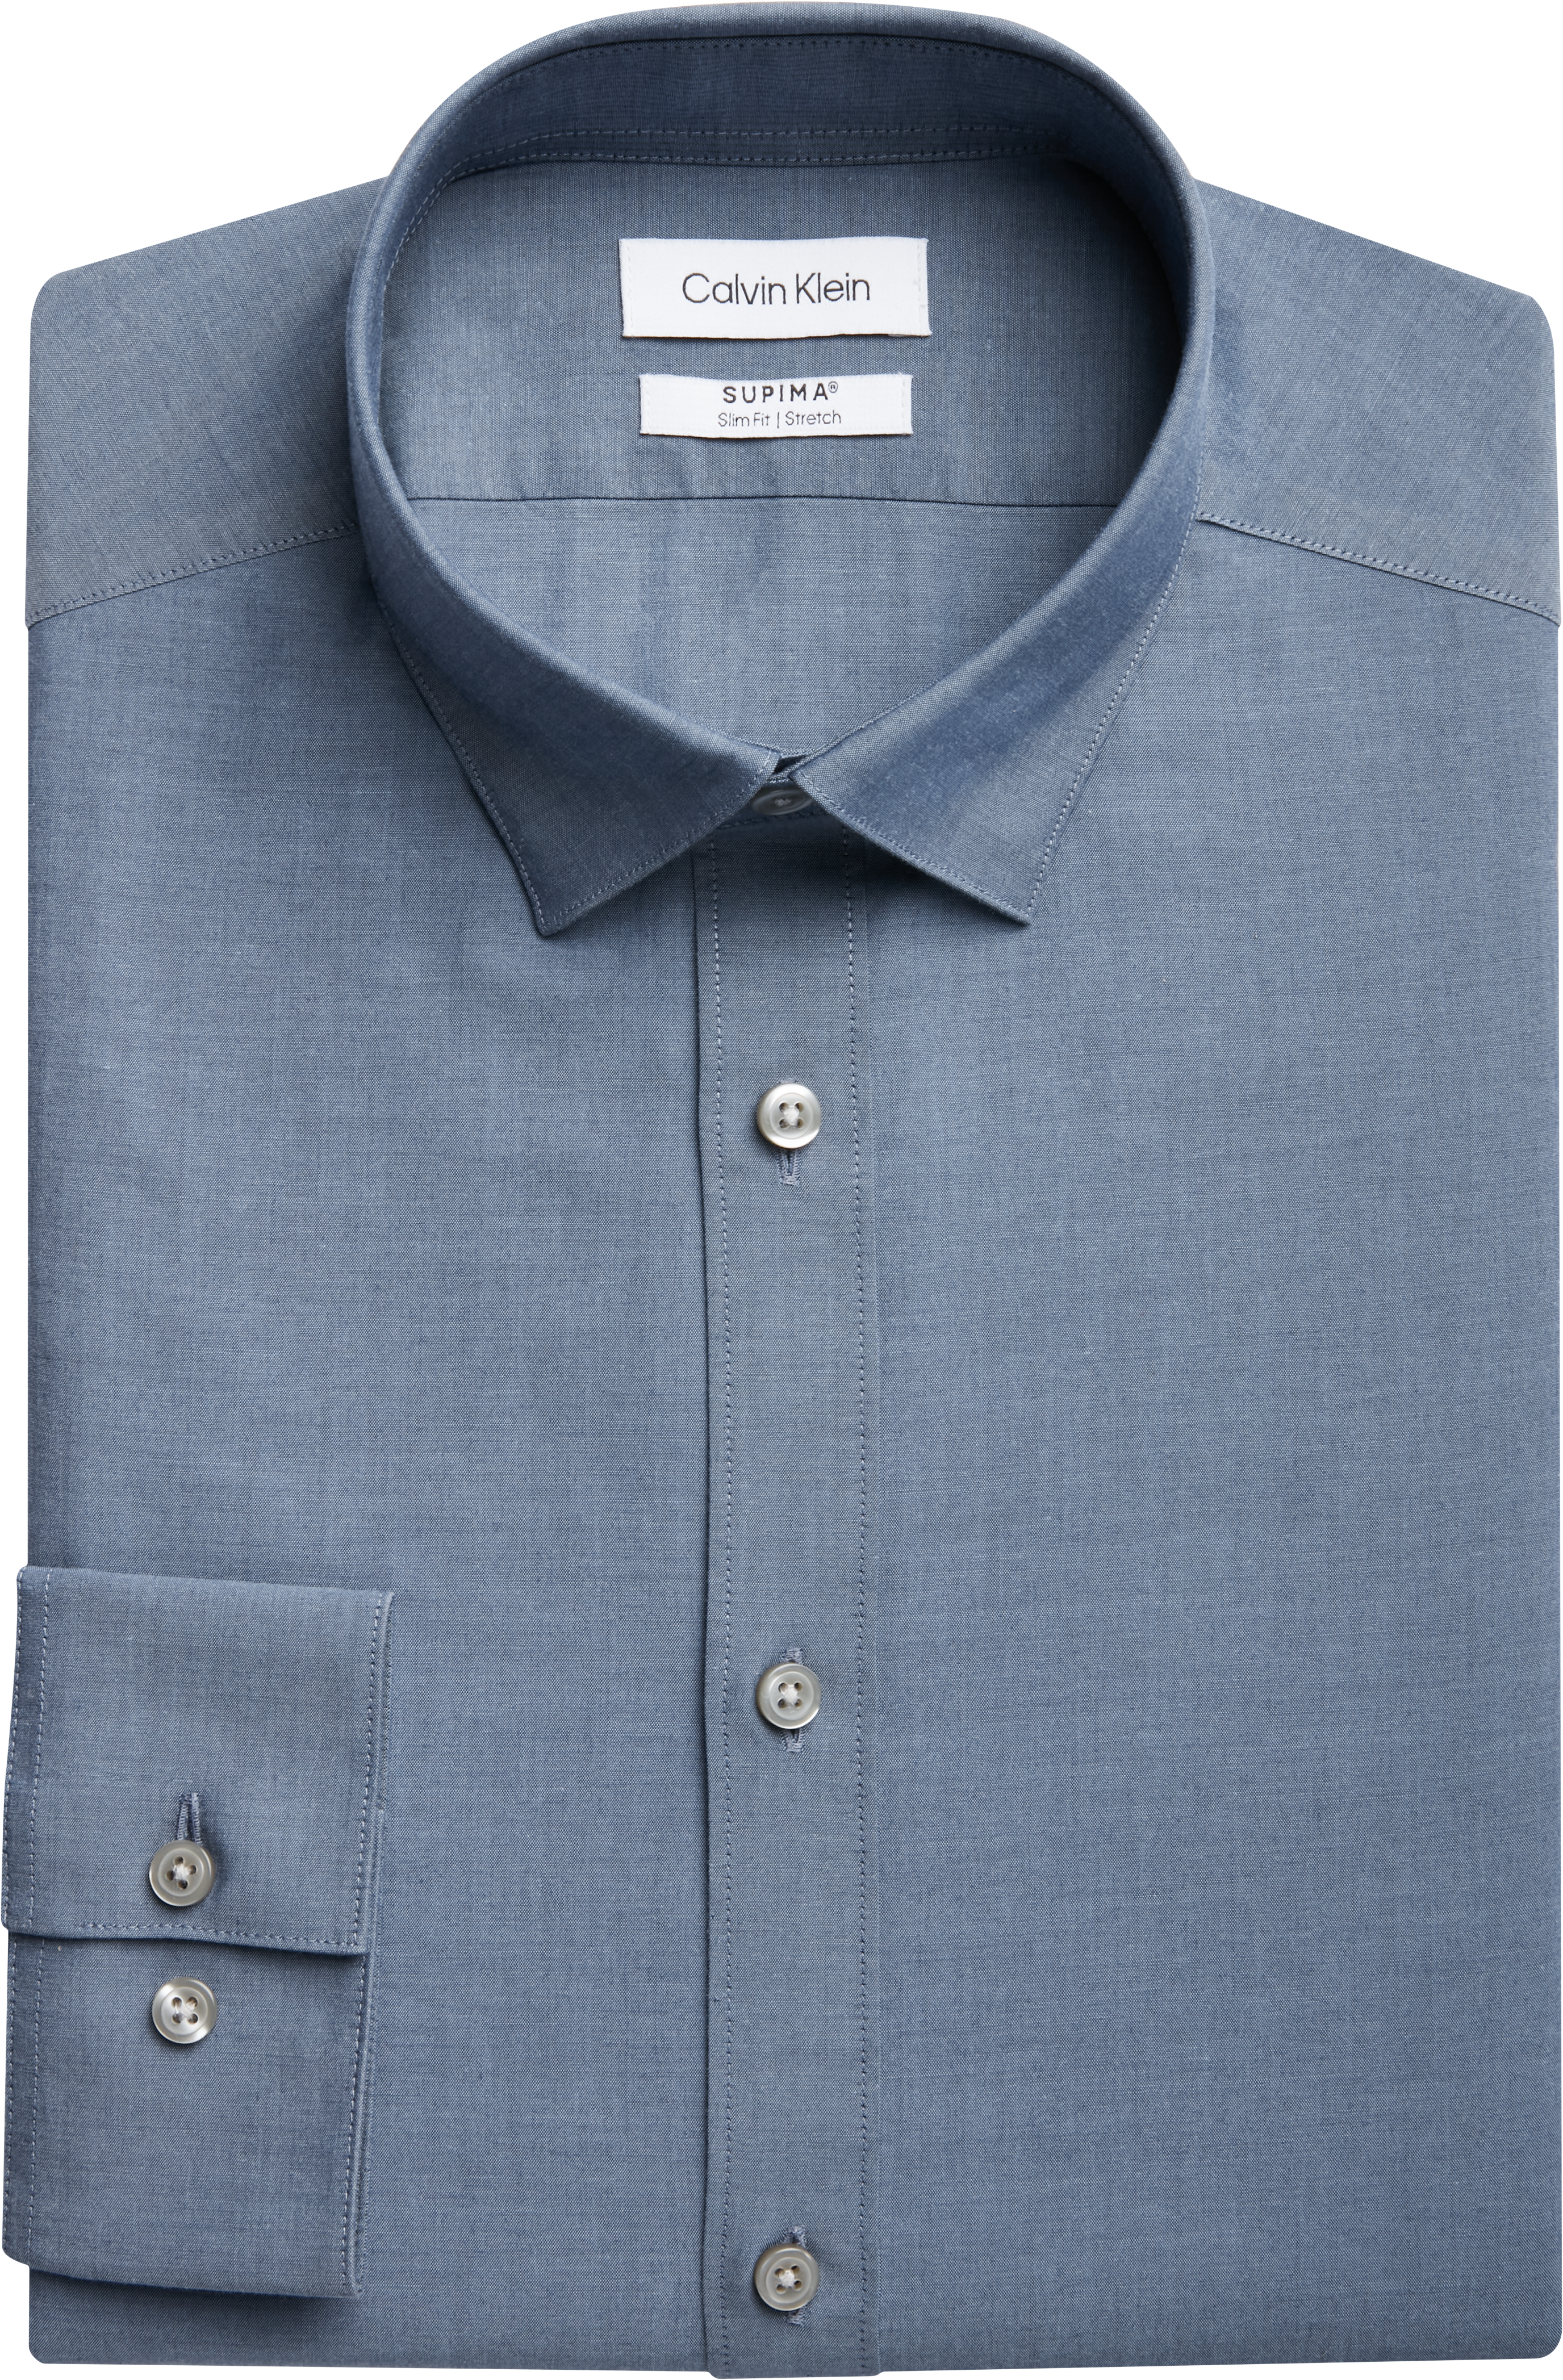 Klein Slim Fit Dress Shirt, Blue - Men's Featured | Men's Wearhouse